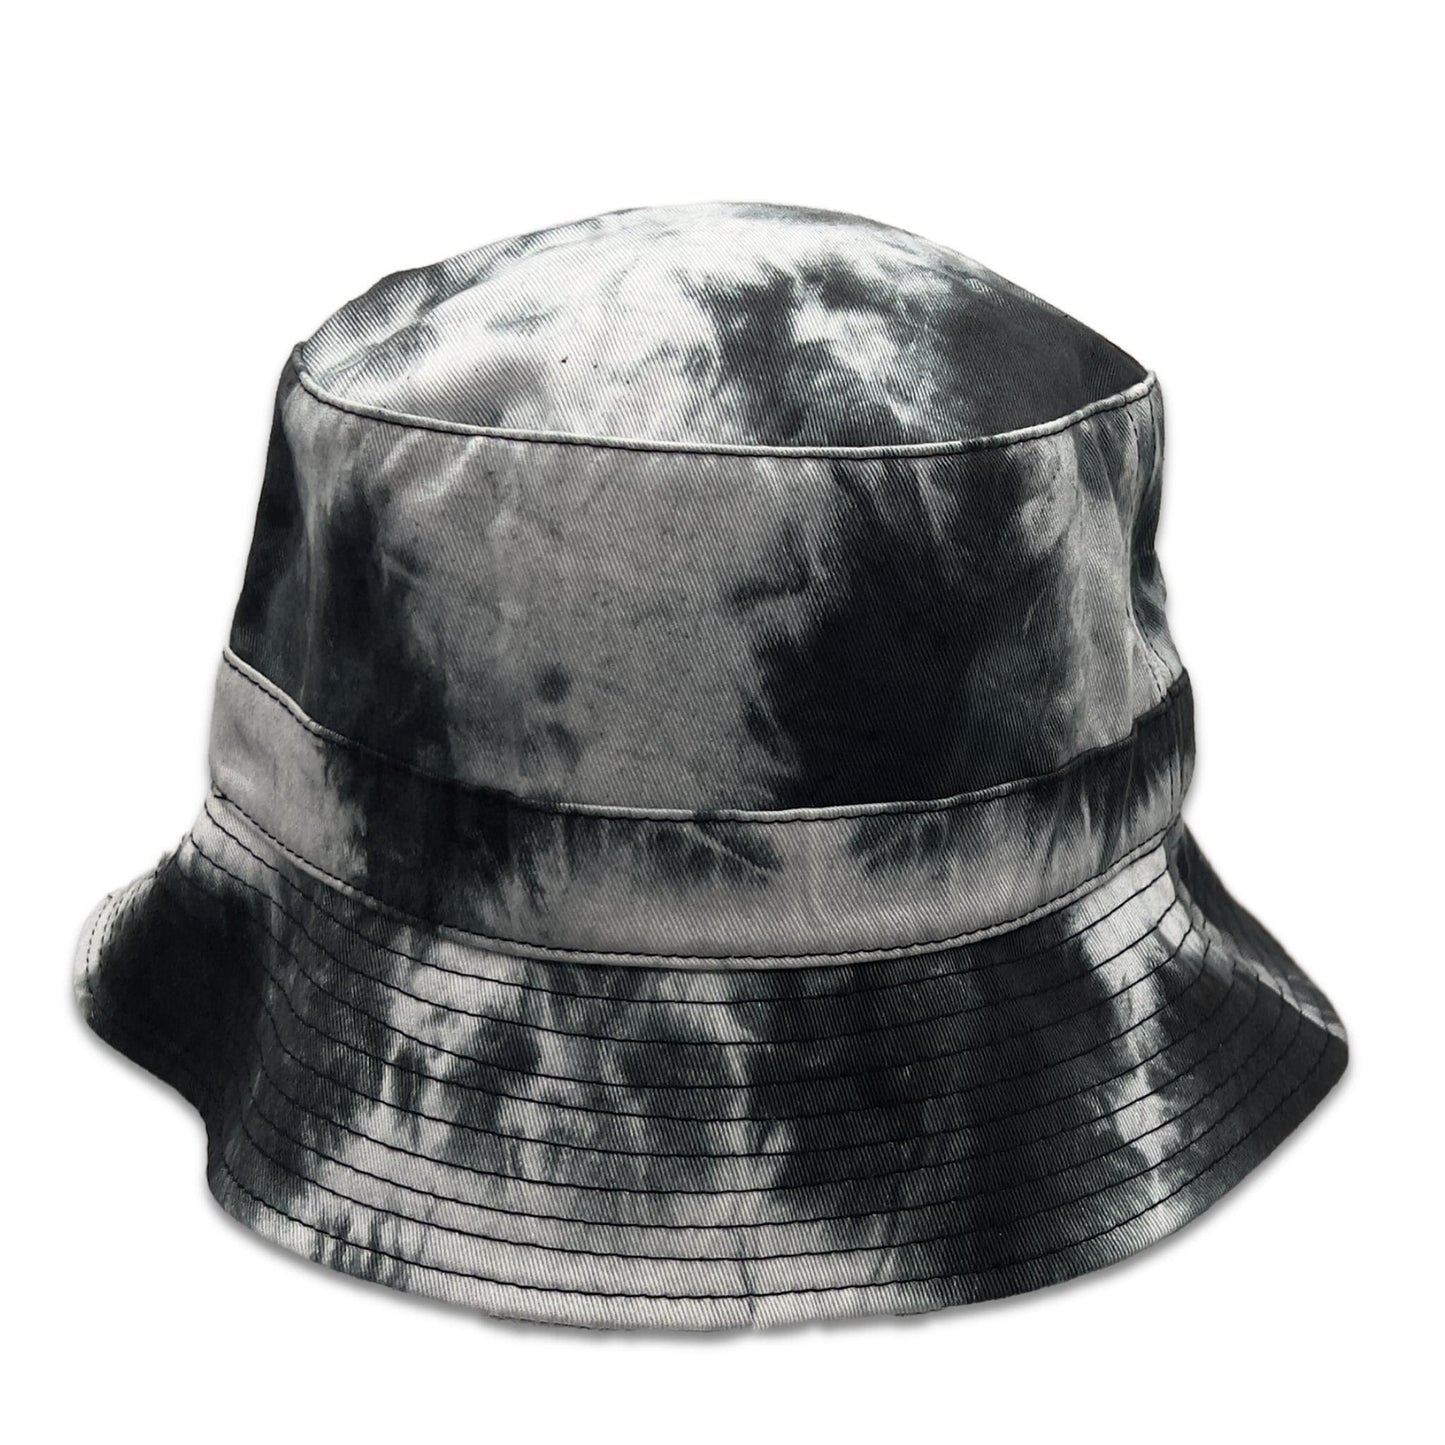 
                  
                    coLLo AppareL Hats COBIE
                  
                